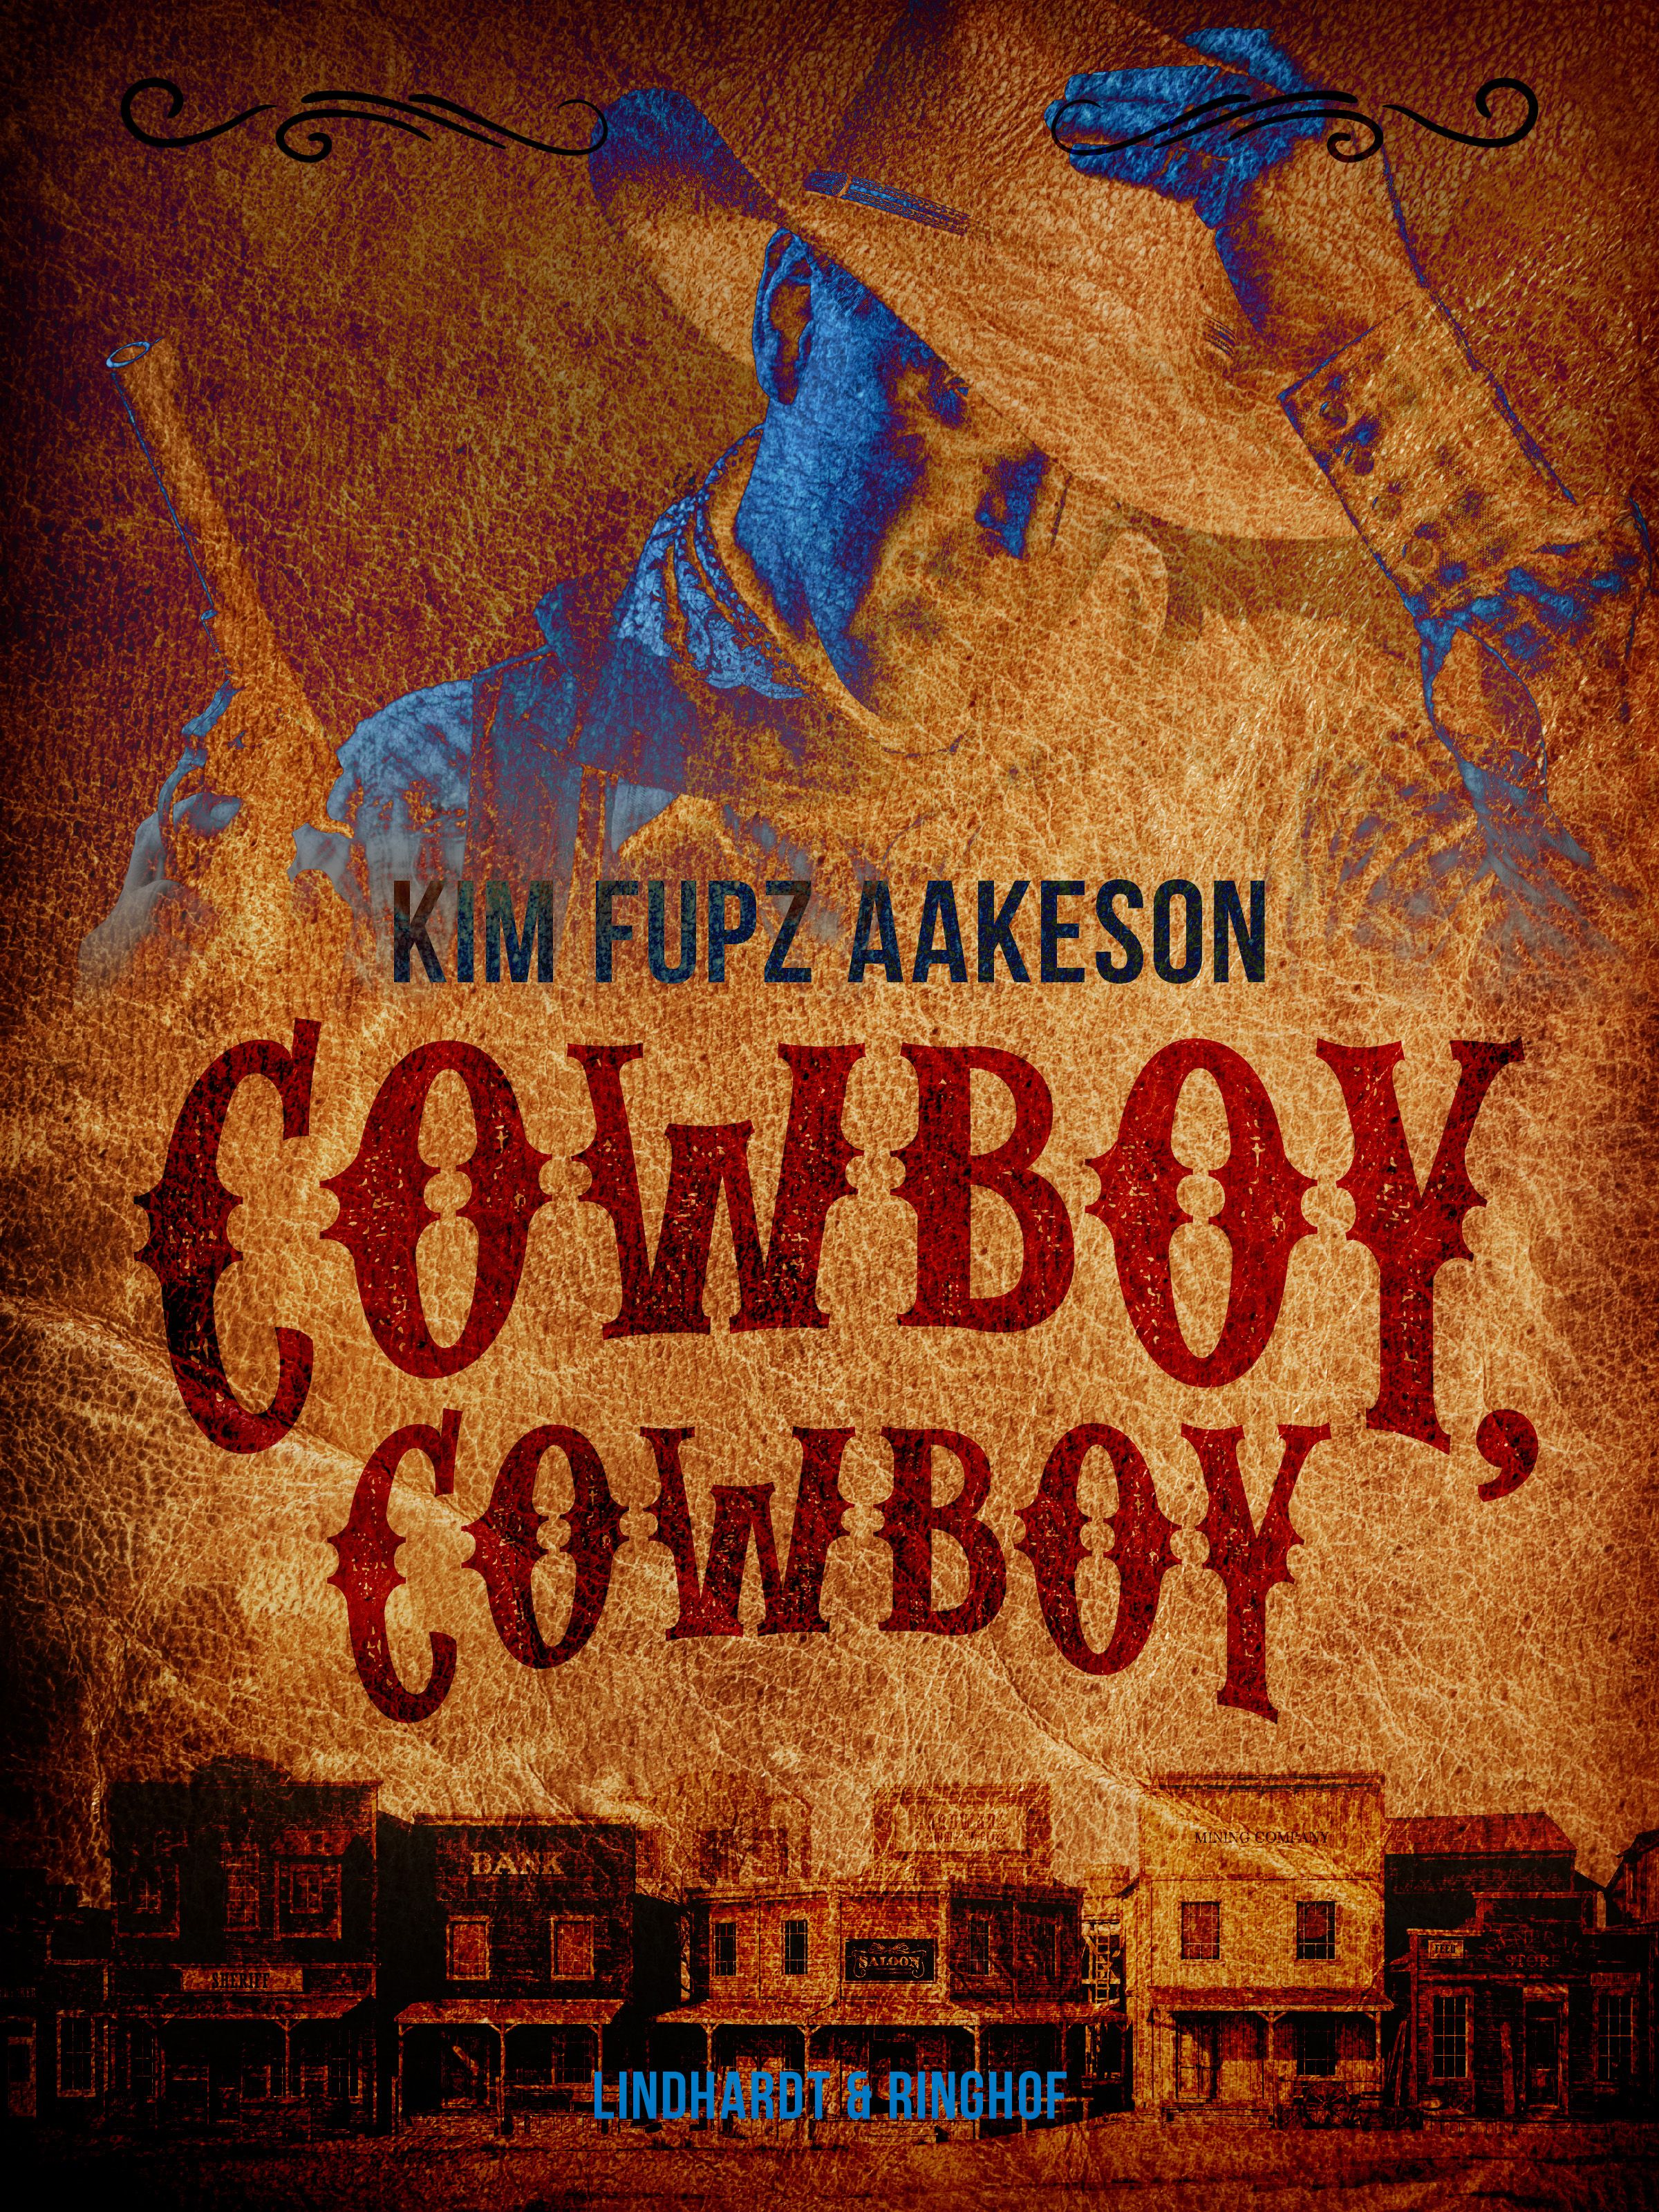 Cowboy, cowboy, e-bok av Kim Fupz Aakeson